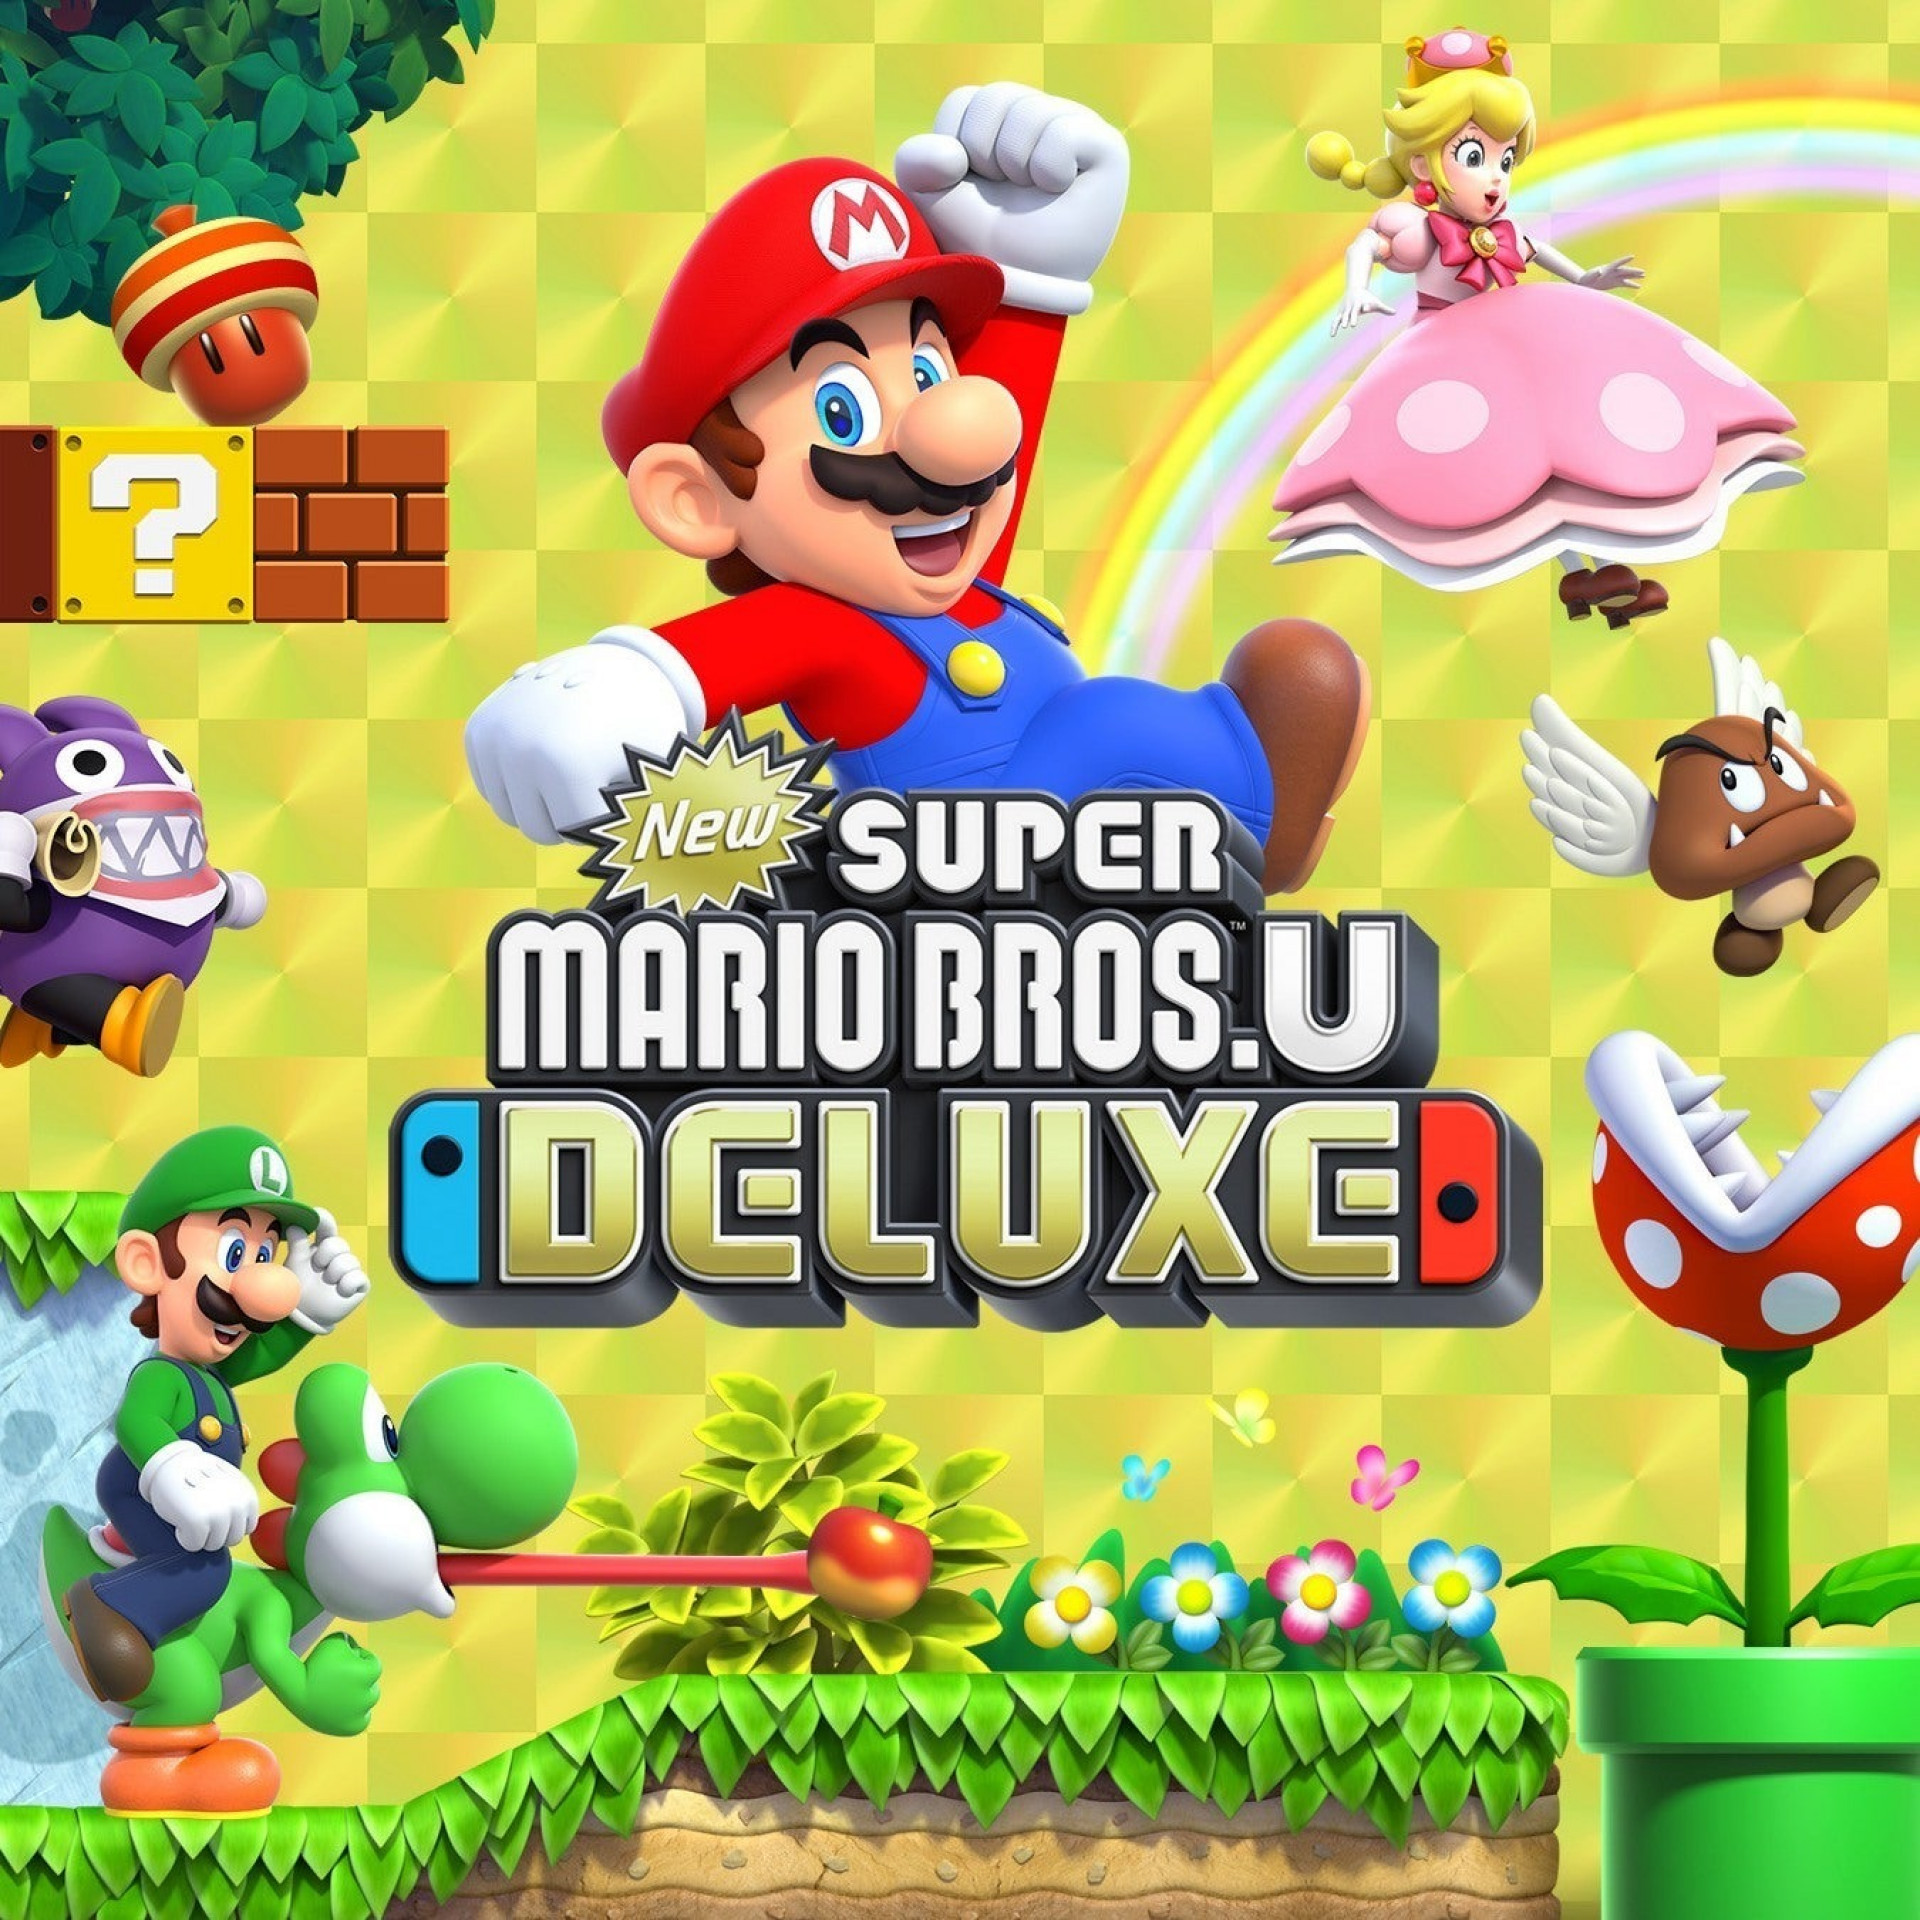 Mario deluxe nintendo switch. New super Mario Bros. U Deluxe Switch. Super Mario Deluxe Nintendo Switch. Super Mario Bros Deluxe Nintendo Switch. Игра для Nintendo Switch New super Mario Bros. U Deluxe.